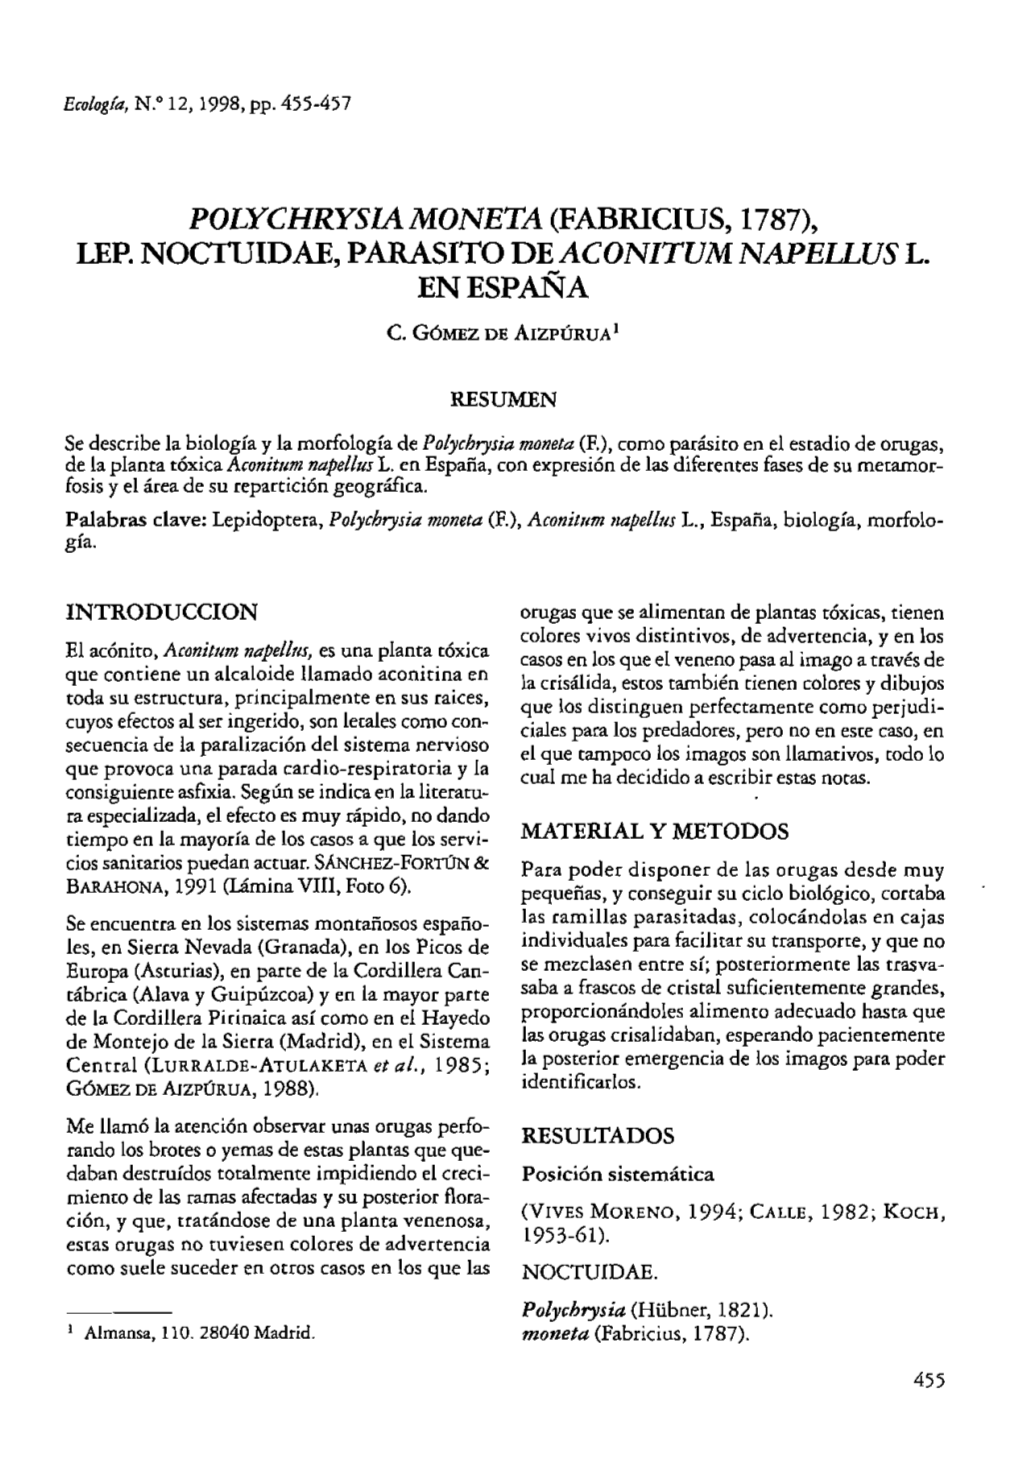 POLYCHRYSIA MONETA (Fabricms, 1787), LEP. Nociljidae, PARASITO DE ACONITUM NAPELLUS L. EN ESPAÑA